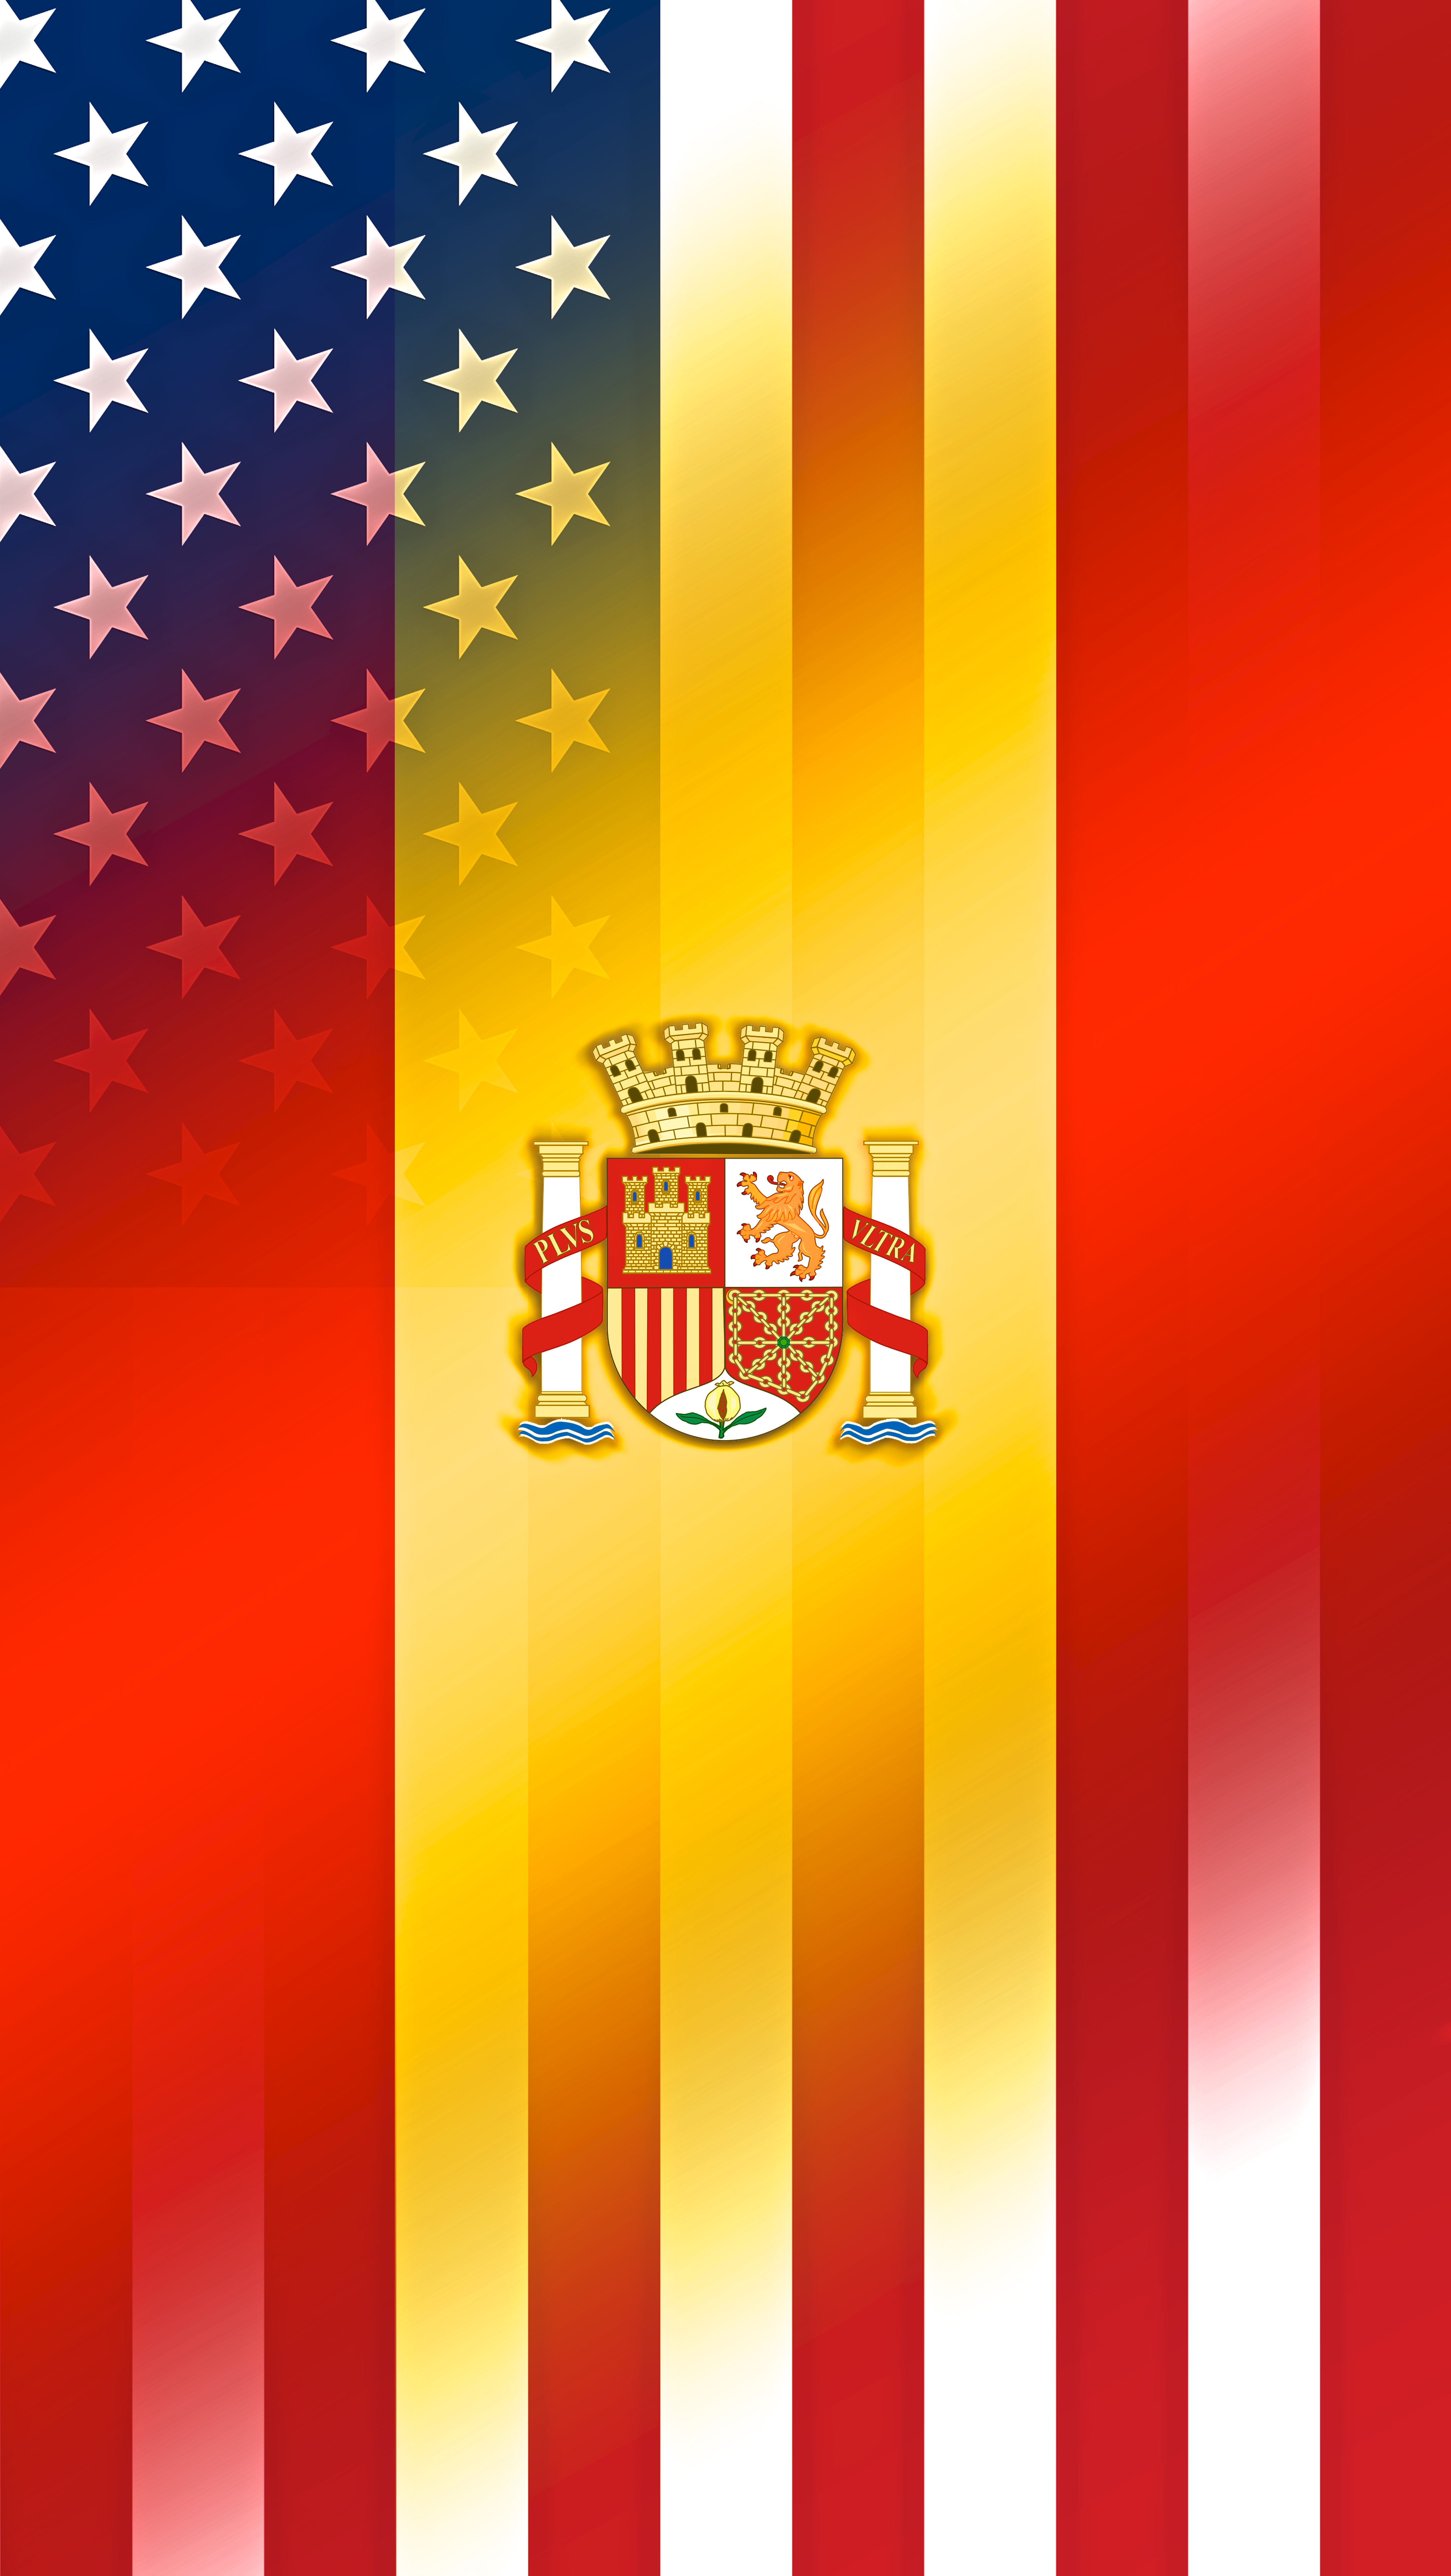 Vertical Reworked Spain USA American Flags España | Flickr - Photo ...